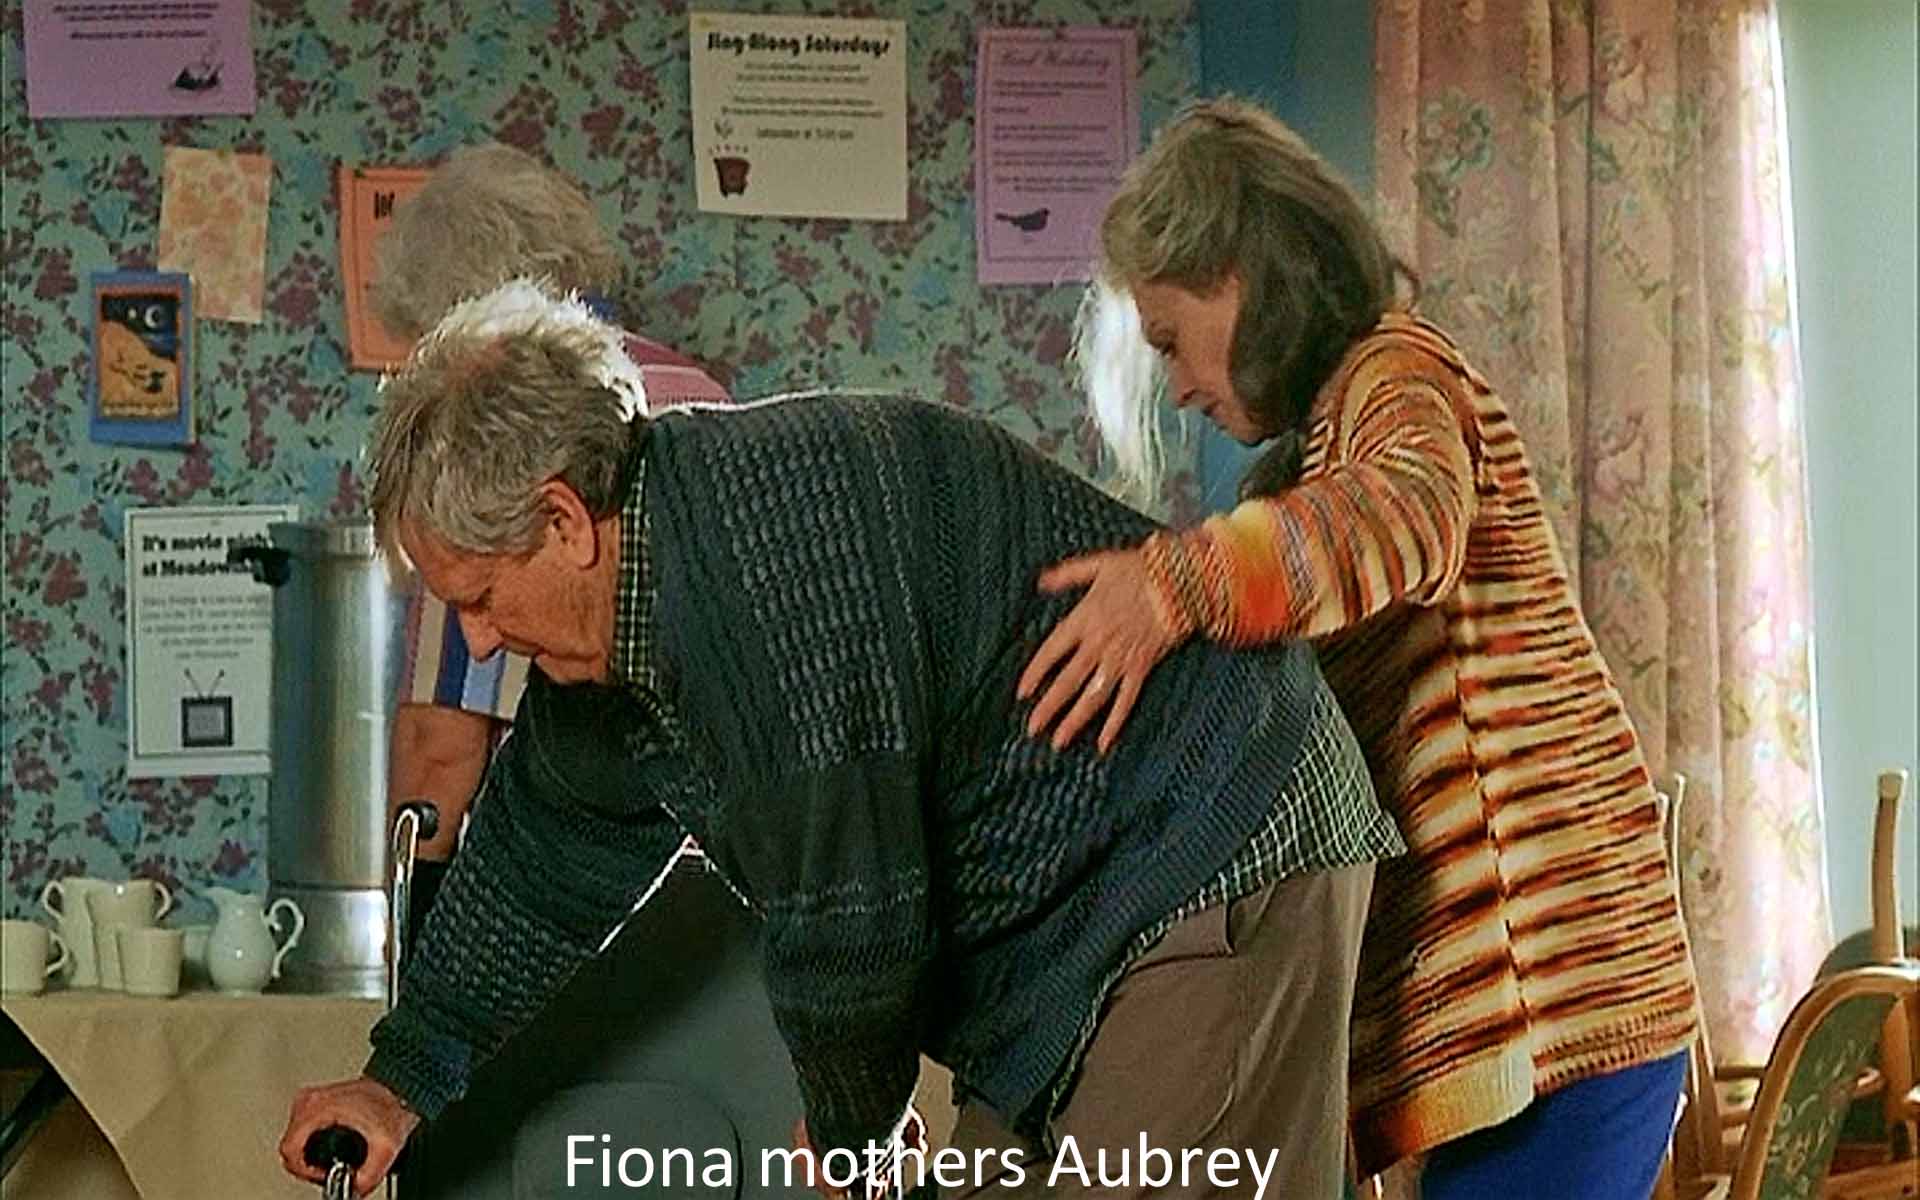 Fiona mothering Aubrey